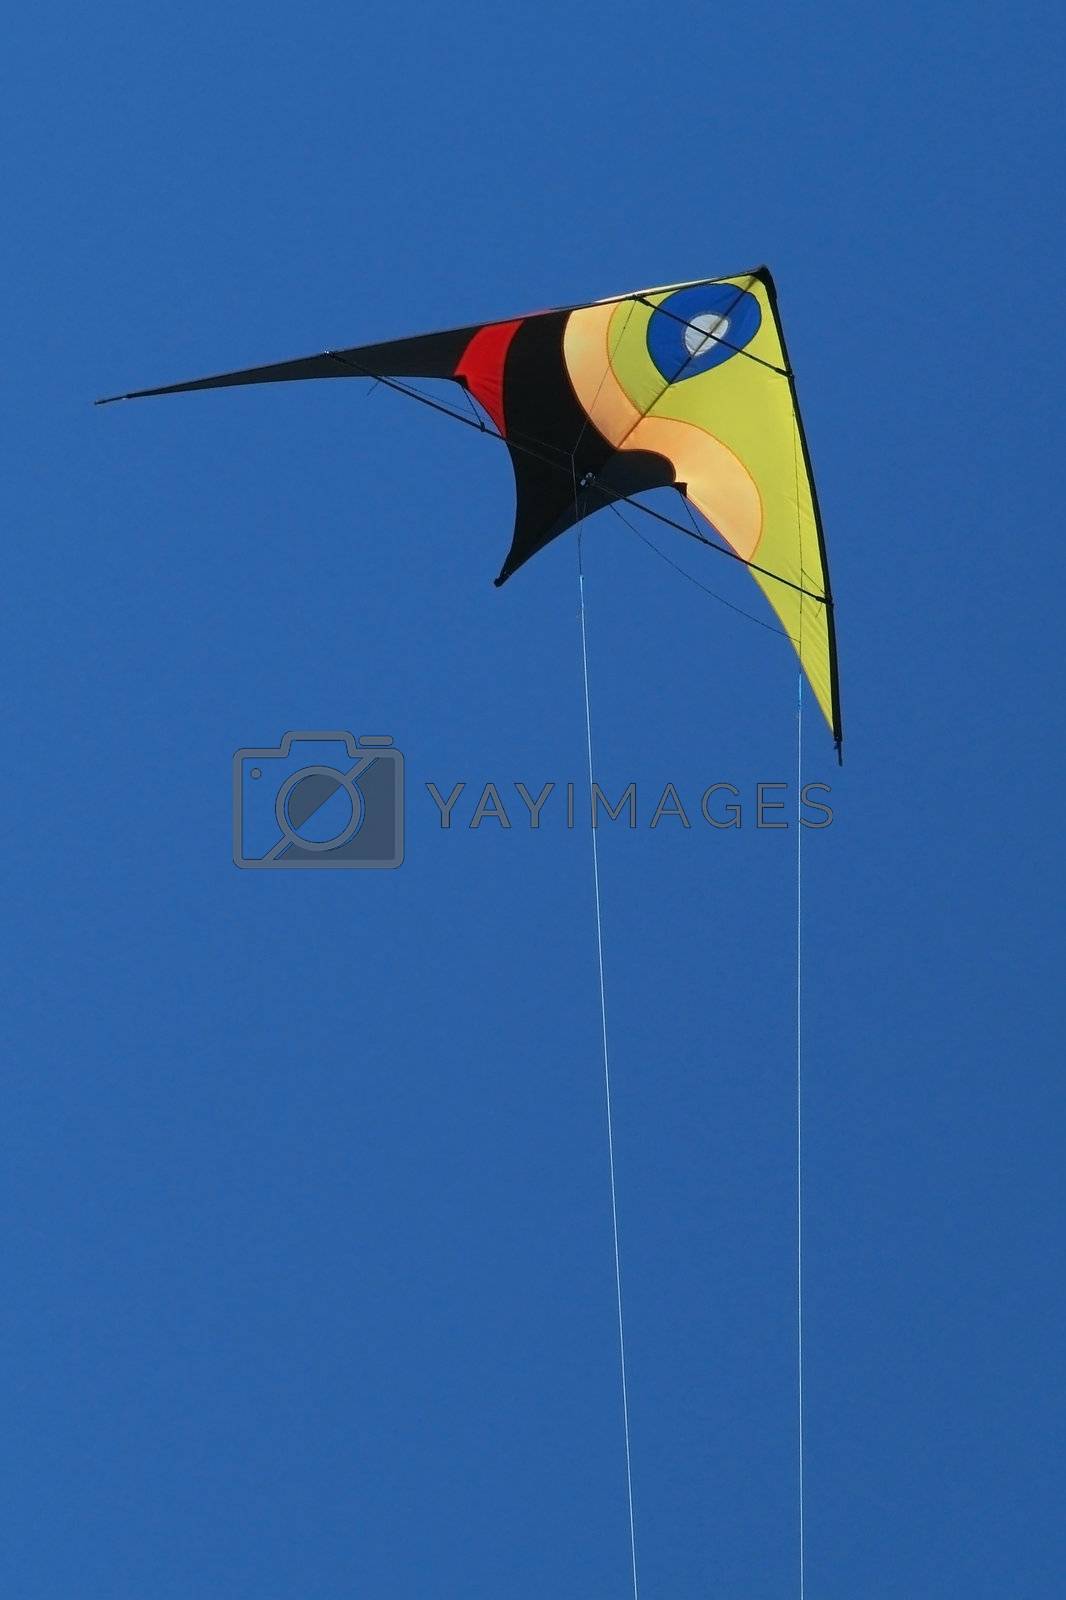 Royalty free image of Stunt-kite flying by epixx